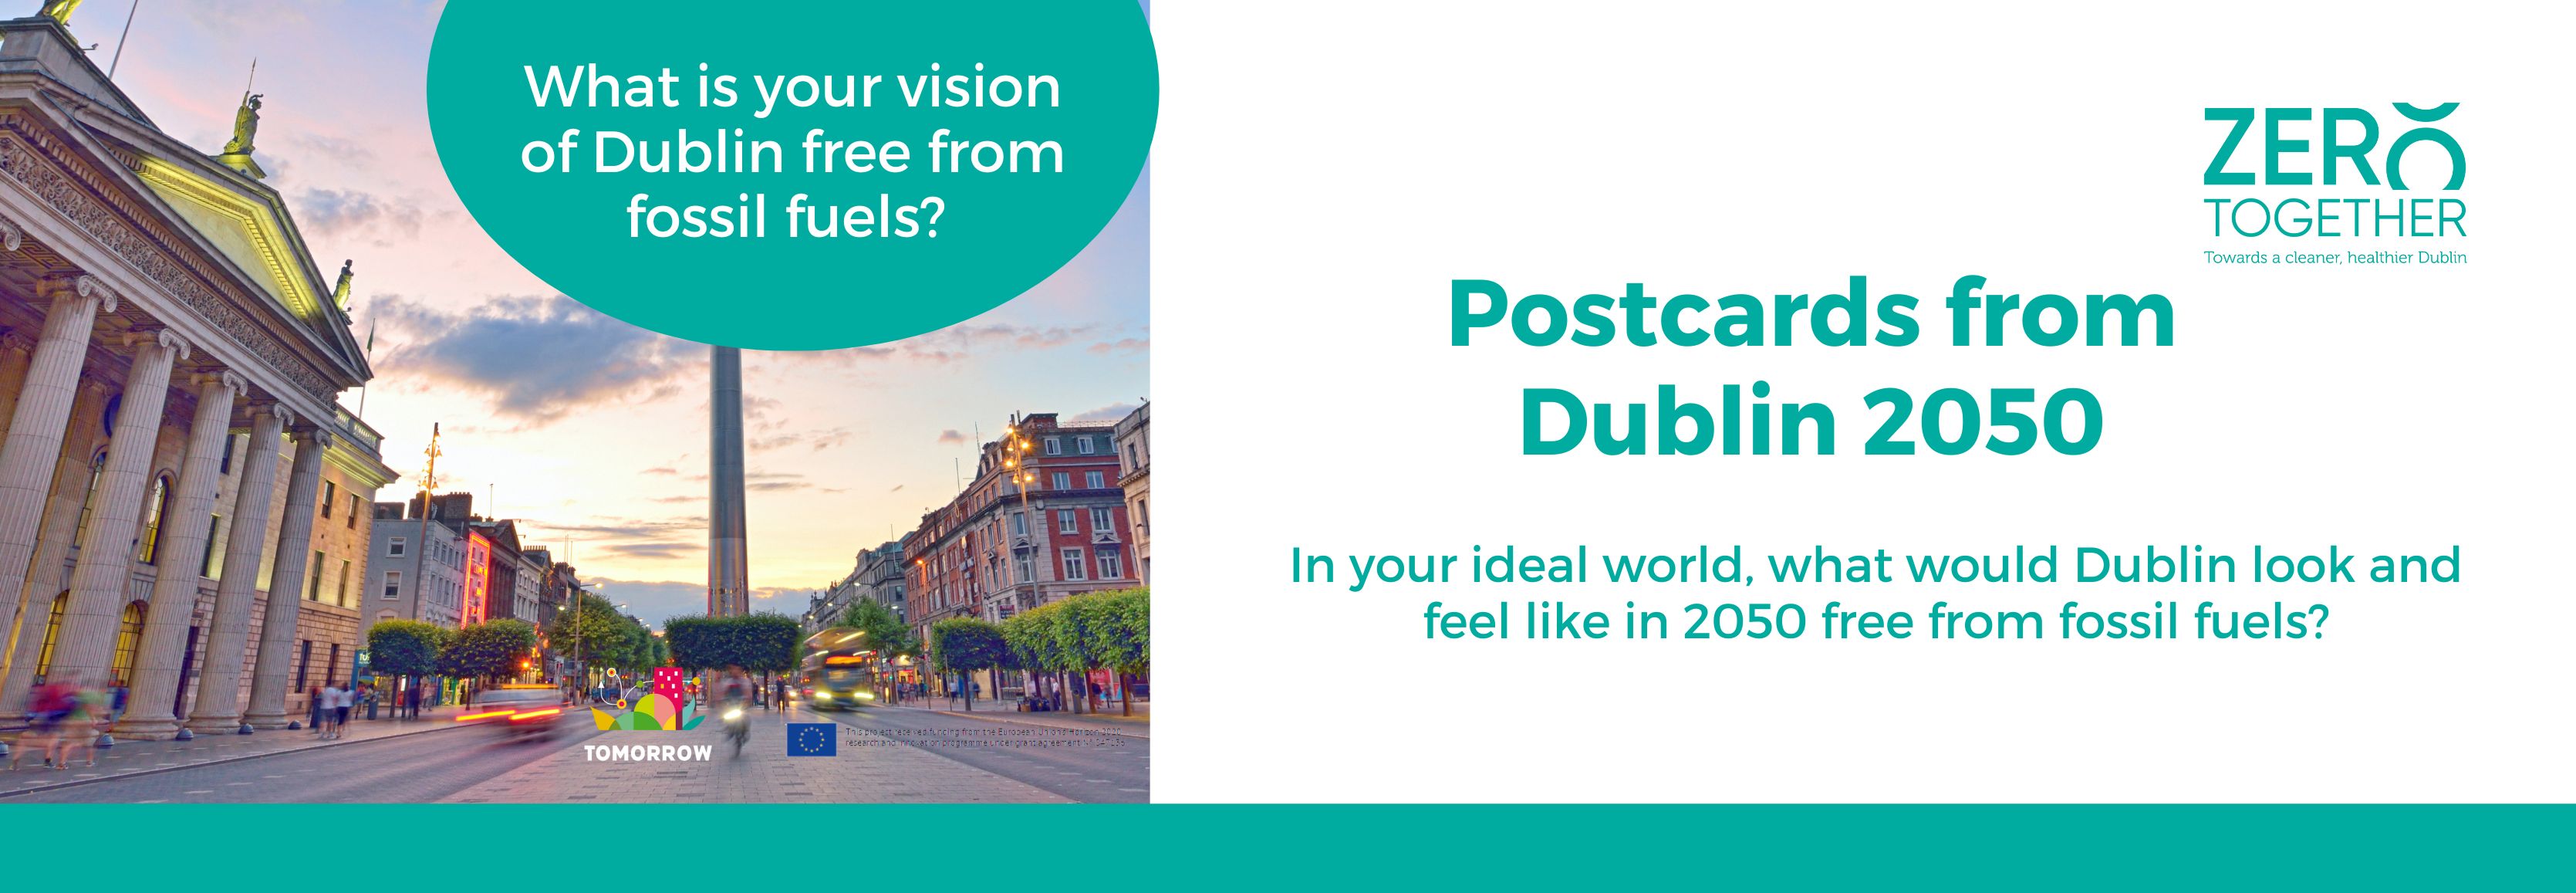 Postcards from Dublin 2050